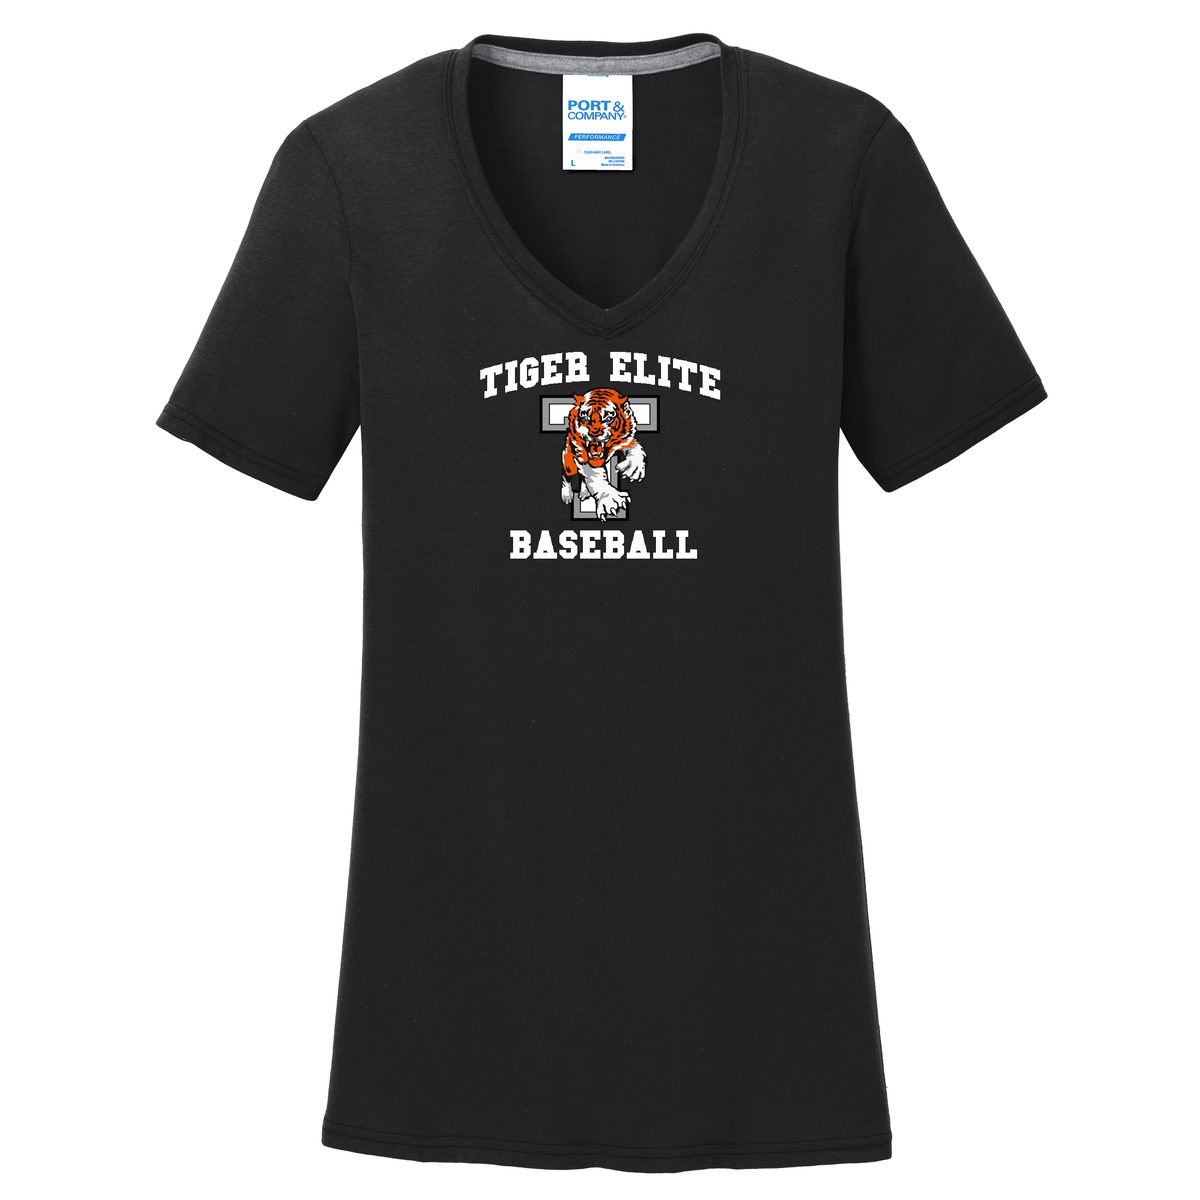 Tiger Elite Baseball Women's T-Shirt